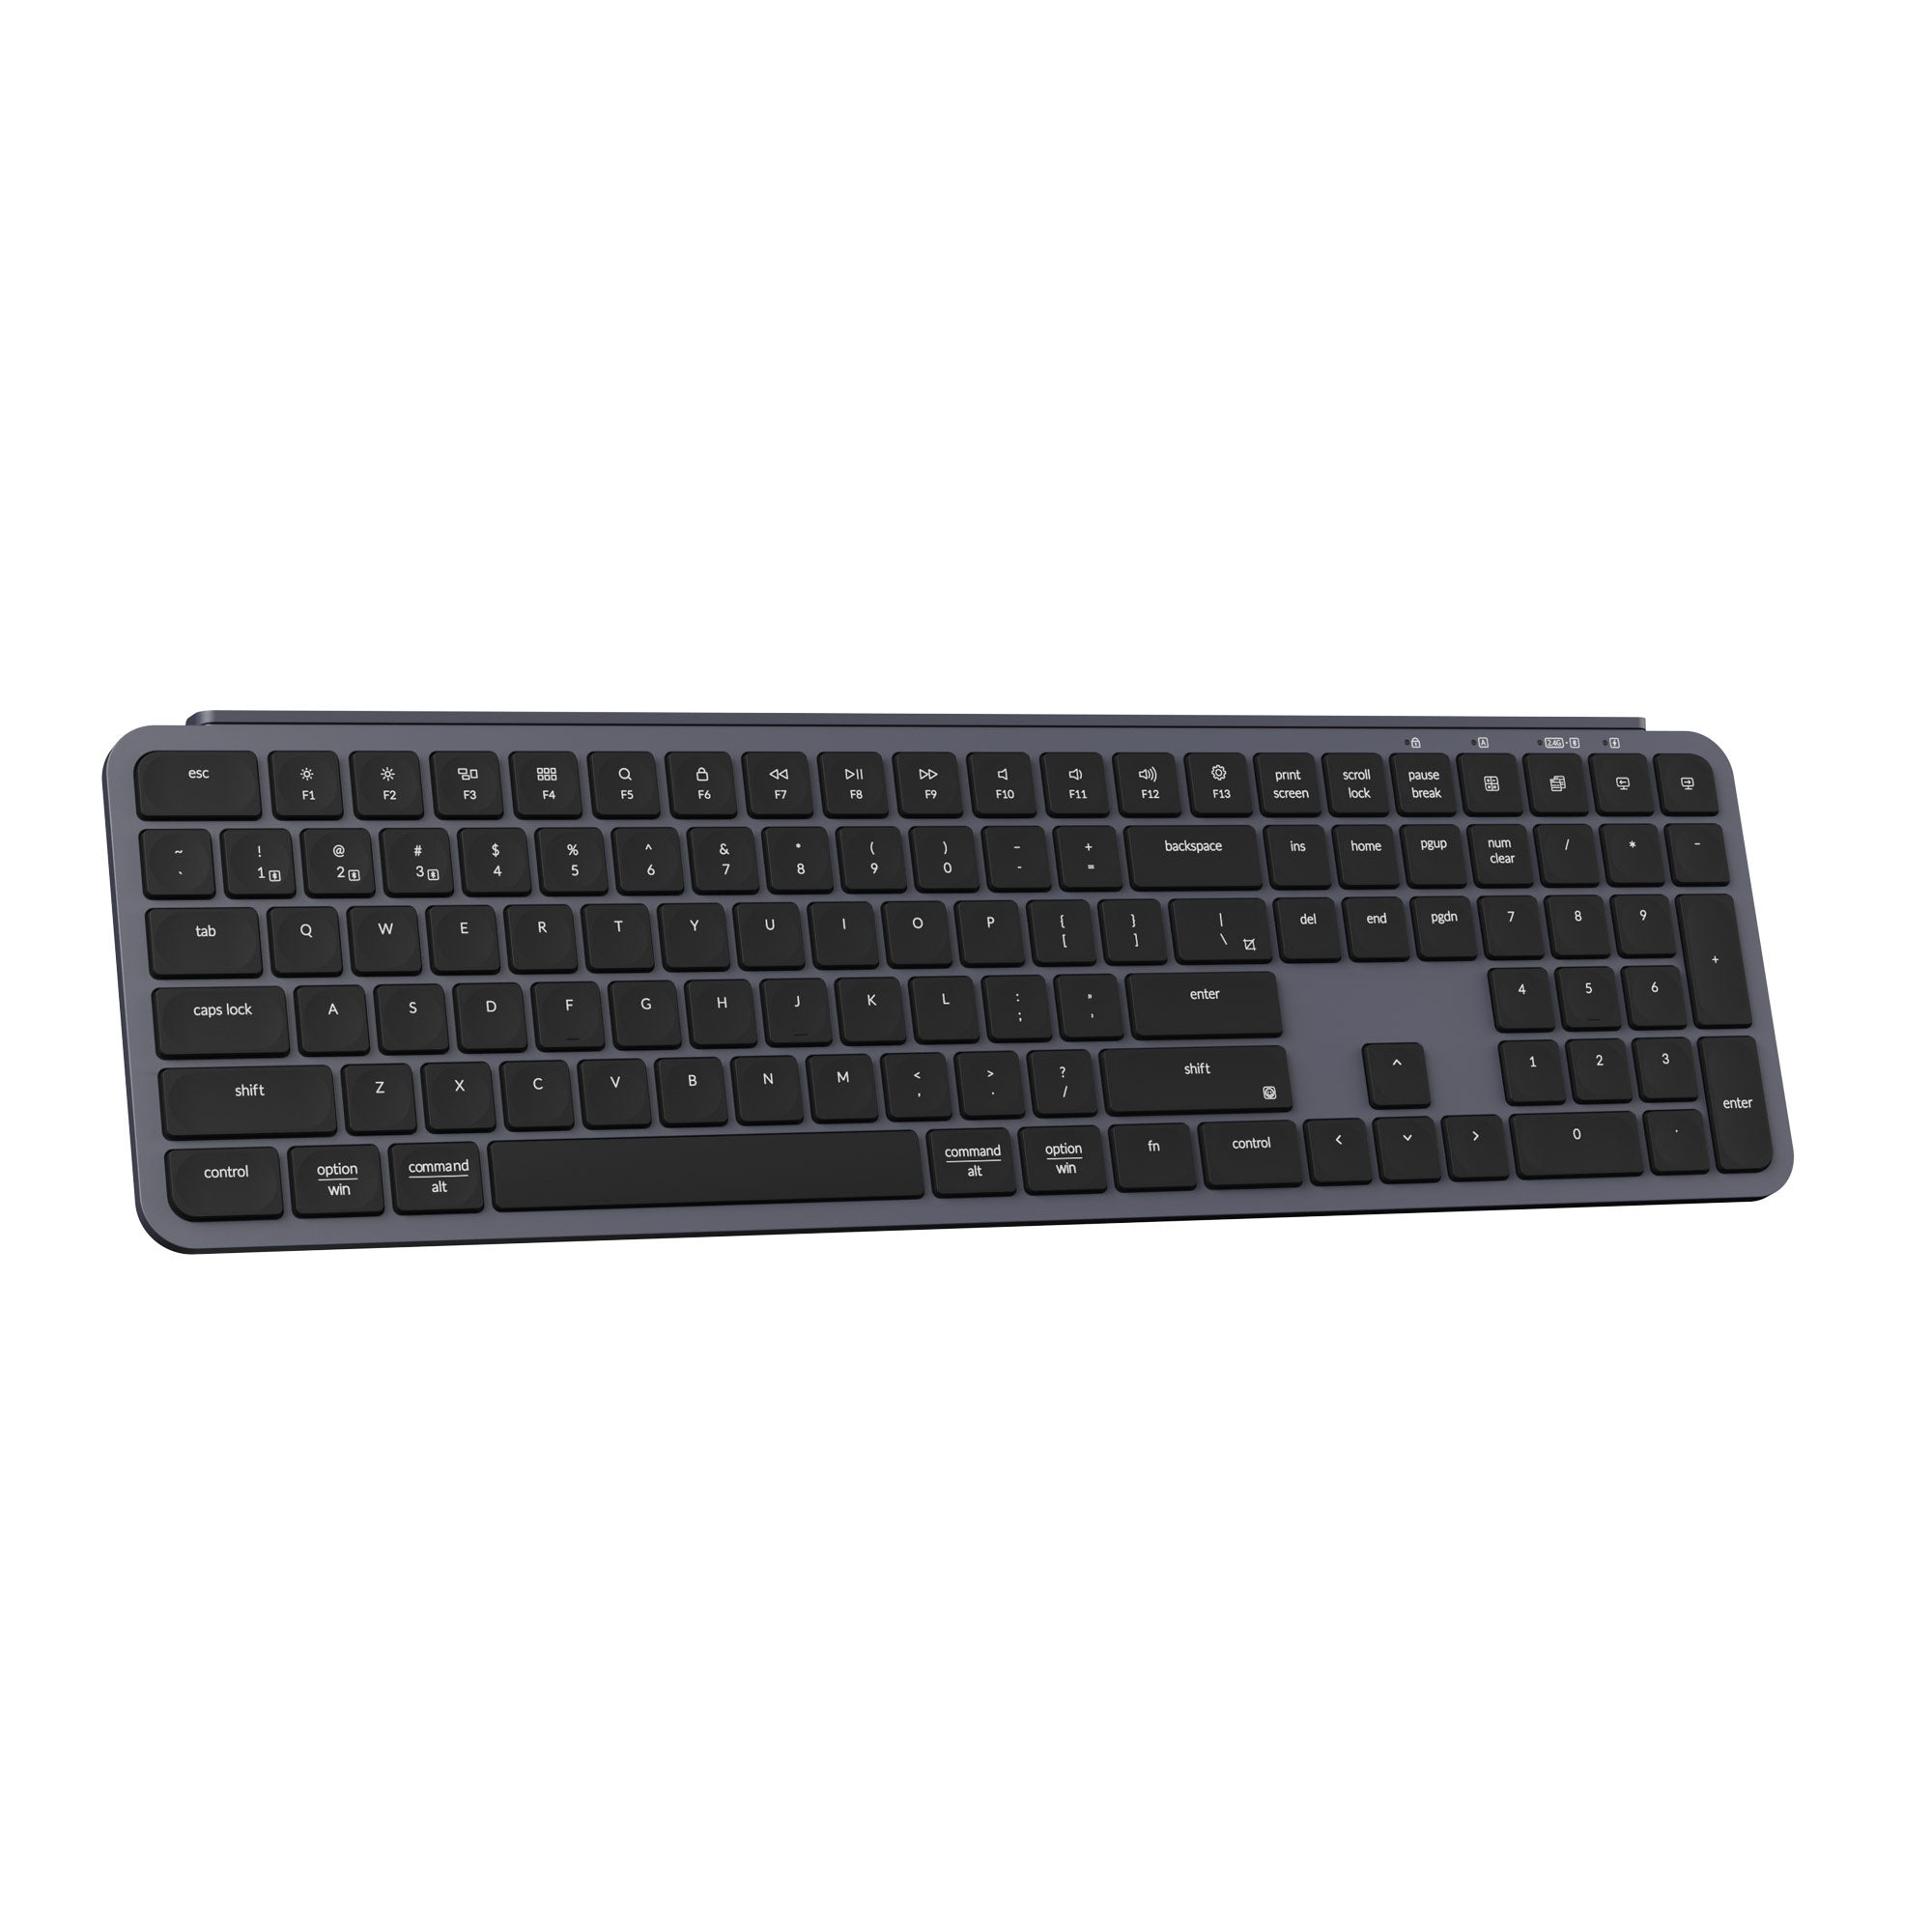 Keychron B6 Pro Ultra Slim Wireless Keyboard full size Layout for Mac Windows Linux Space Gray